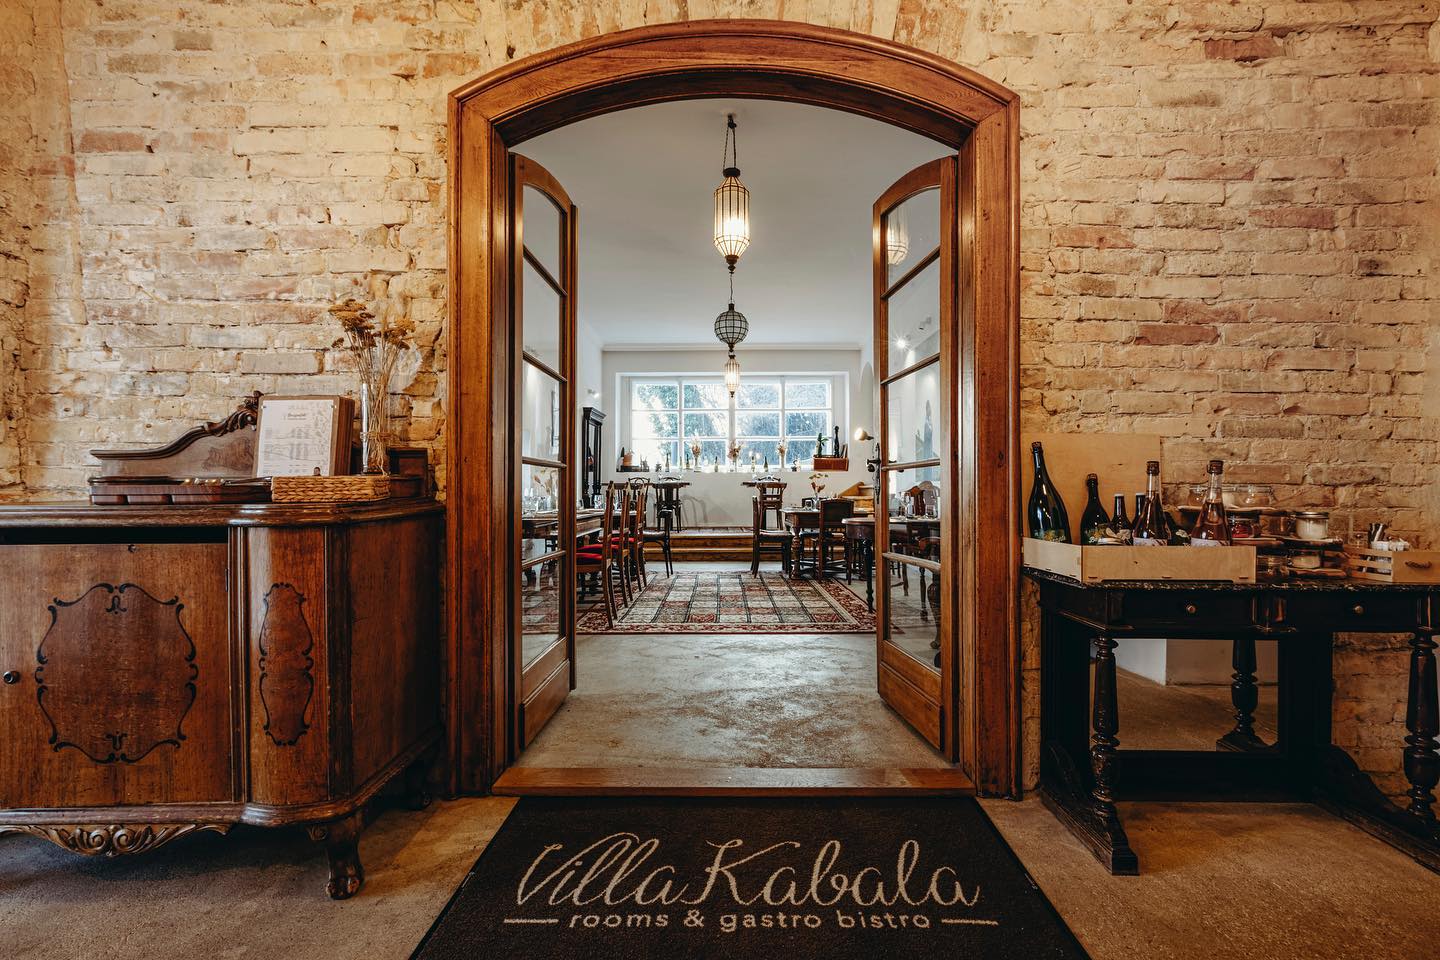 Legjobb vidéki éttermek Dining Guide TOP100 lista - Villa Kabala Szigliget